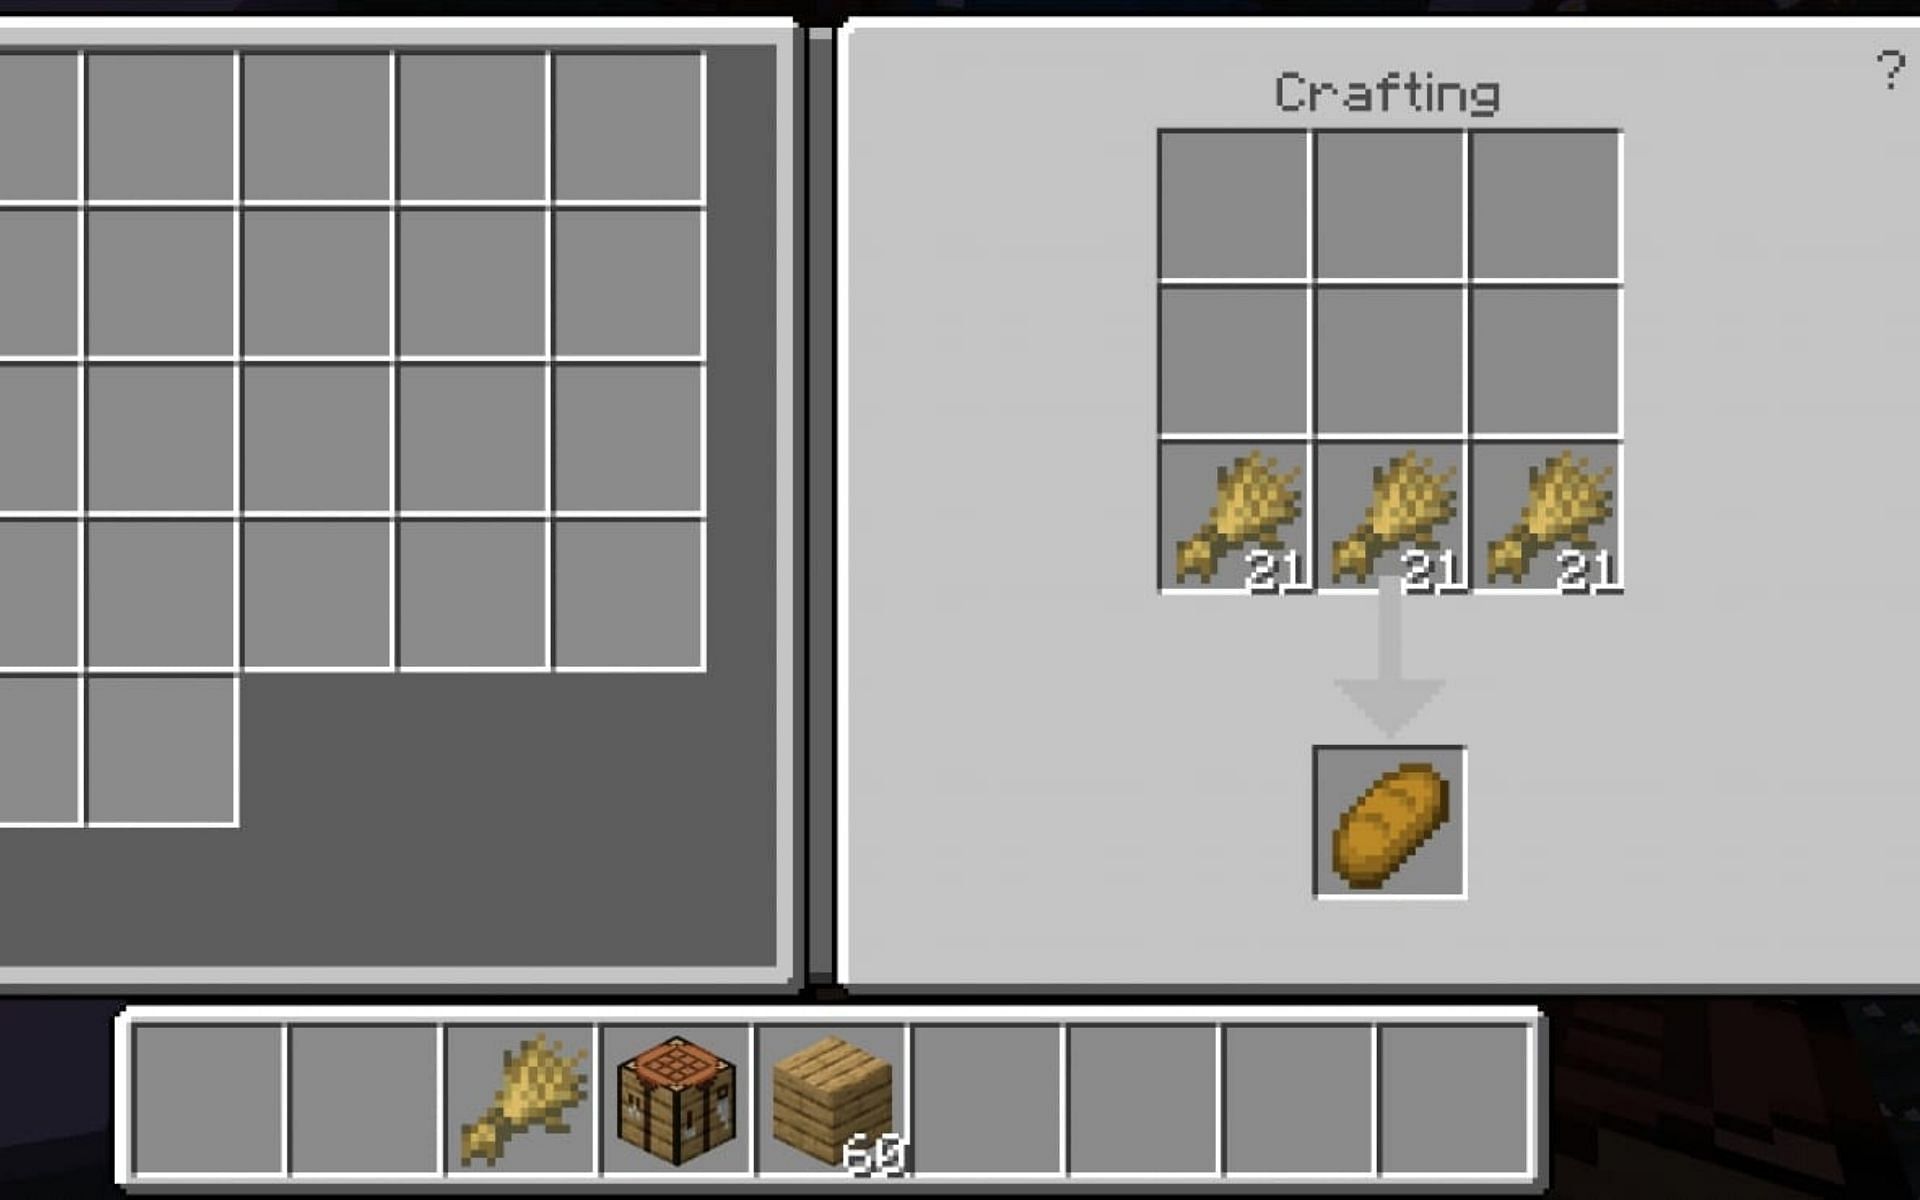 Crafting recipe for bread (Image via Minecraft)